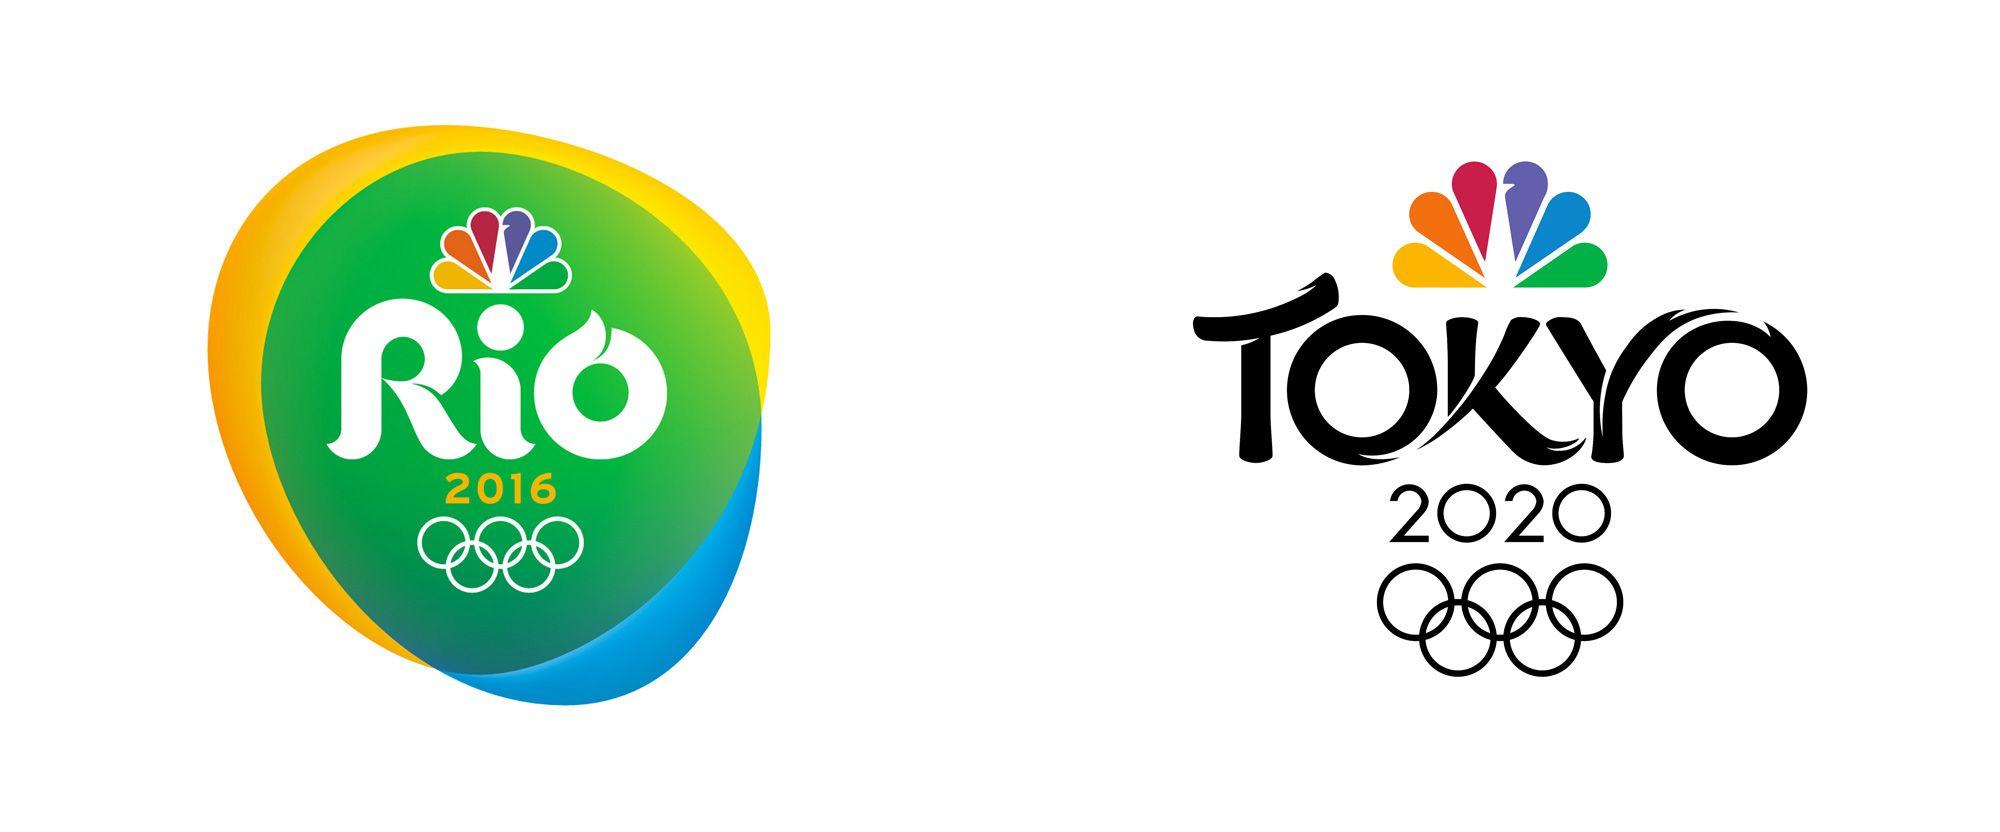 NBC Logo - Brand New: New Logo for NBC Olympics 2020 Broadcast